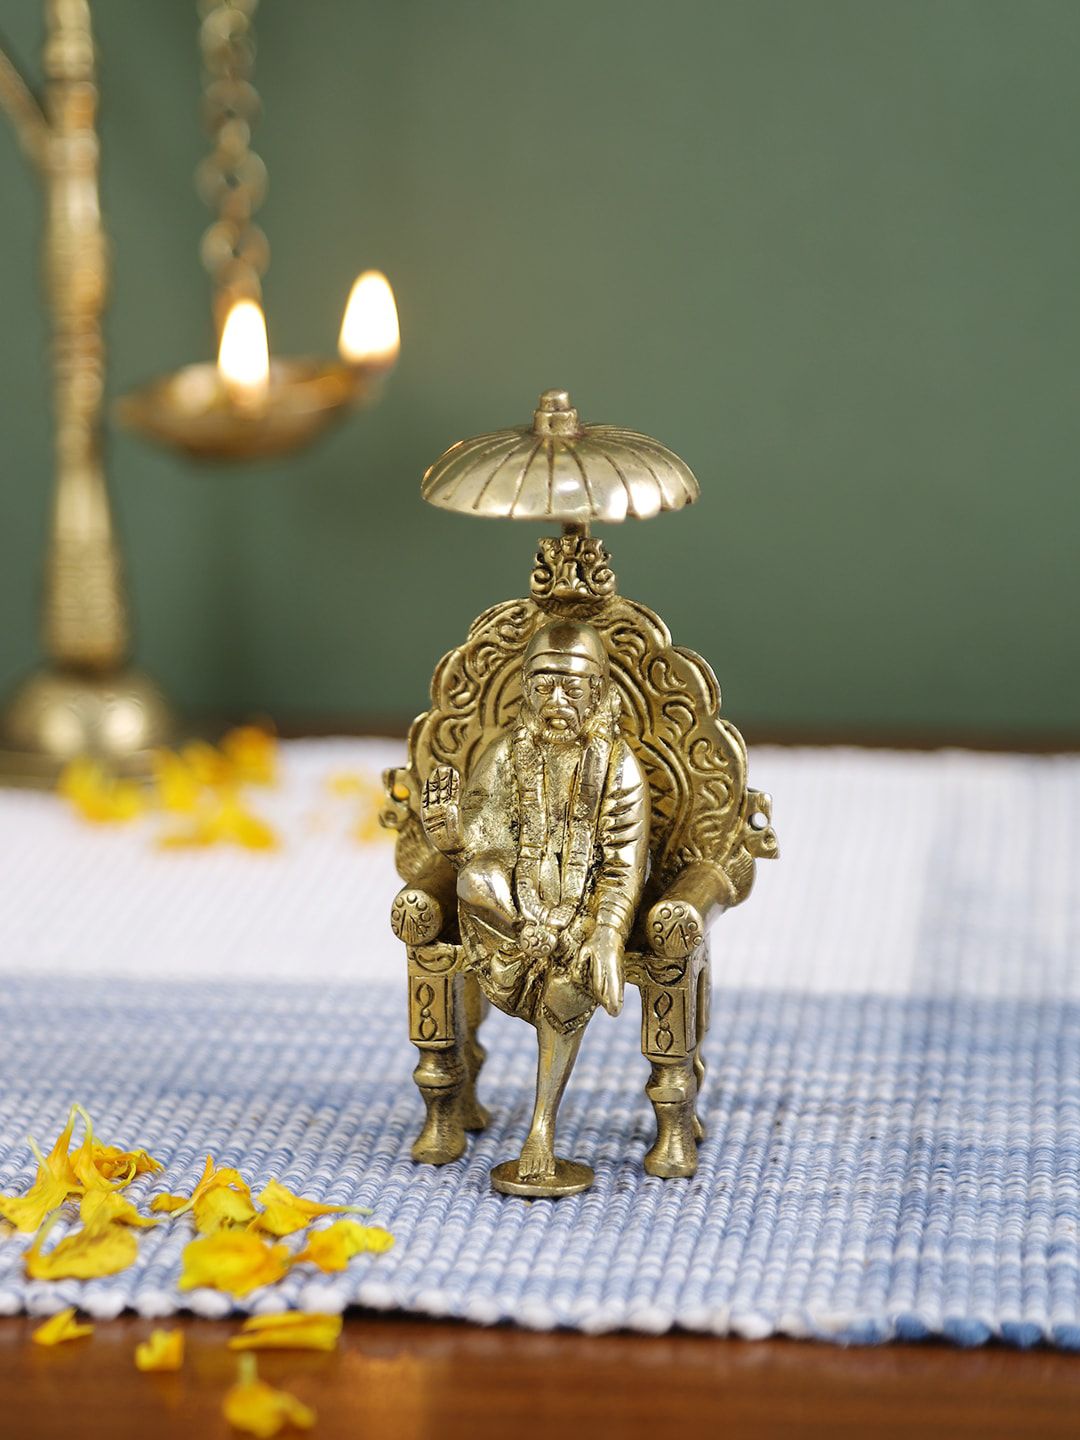 Imli Street Gold-Toned Sai Baba Small Showpiece Price in India